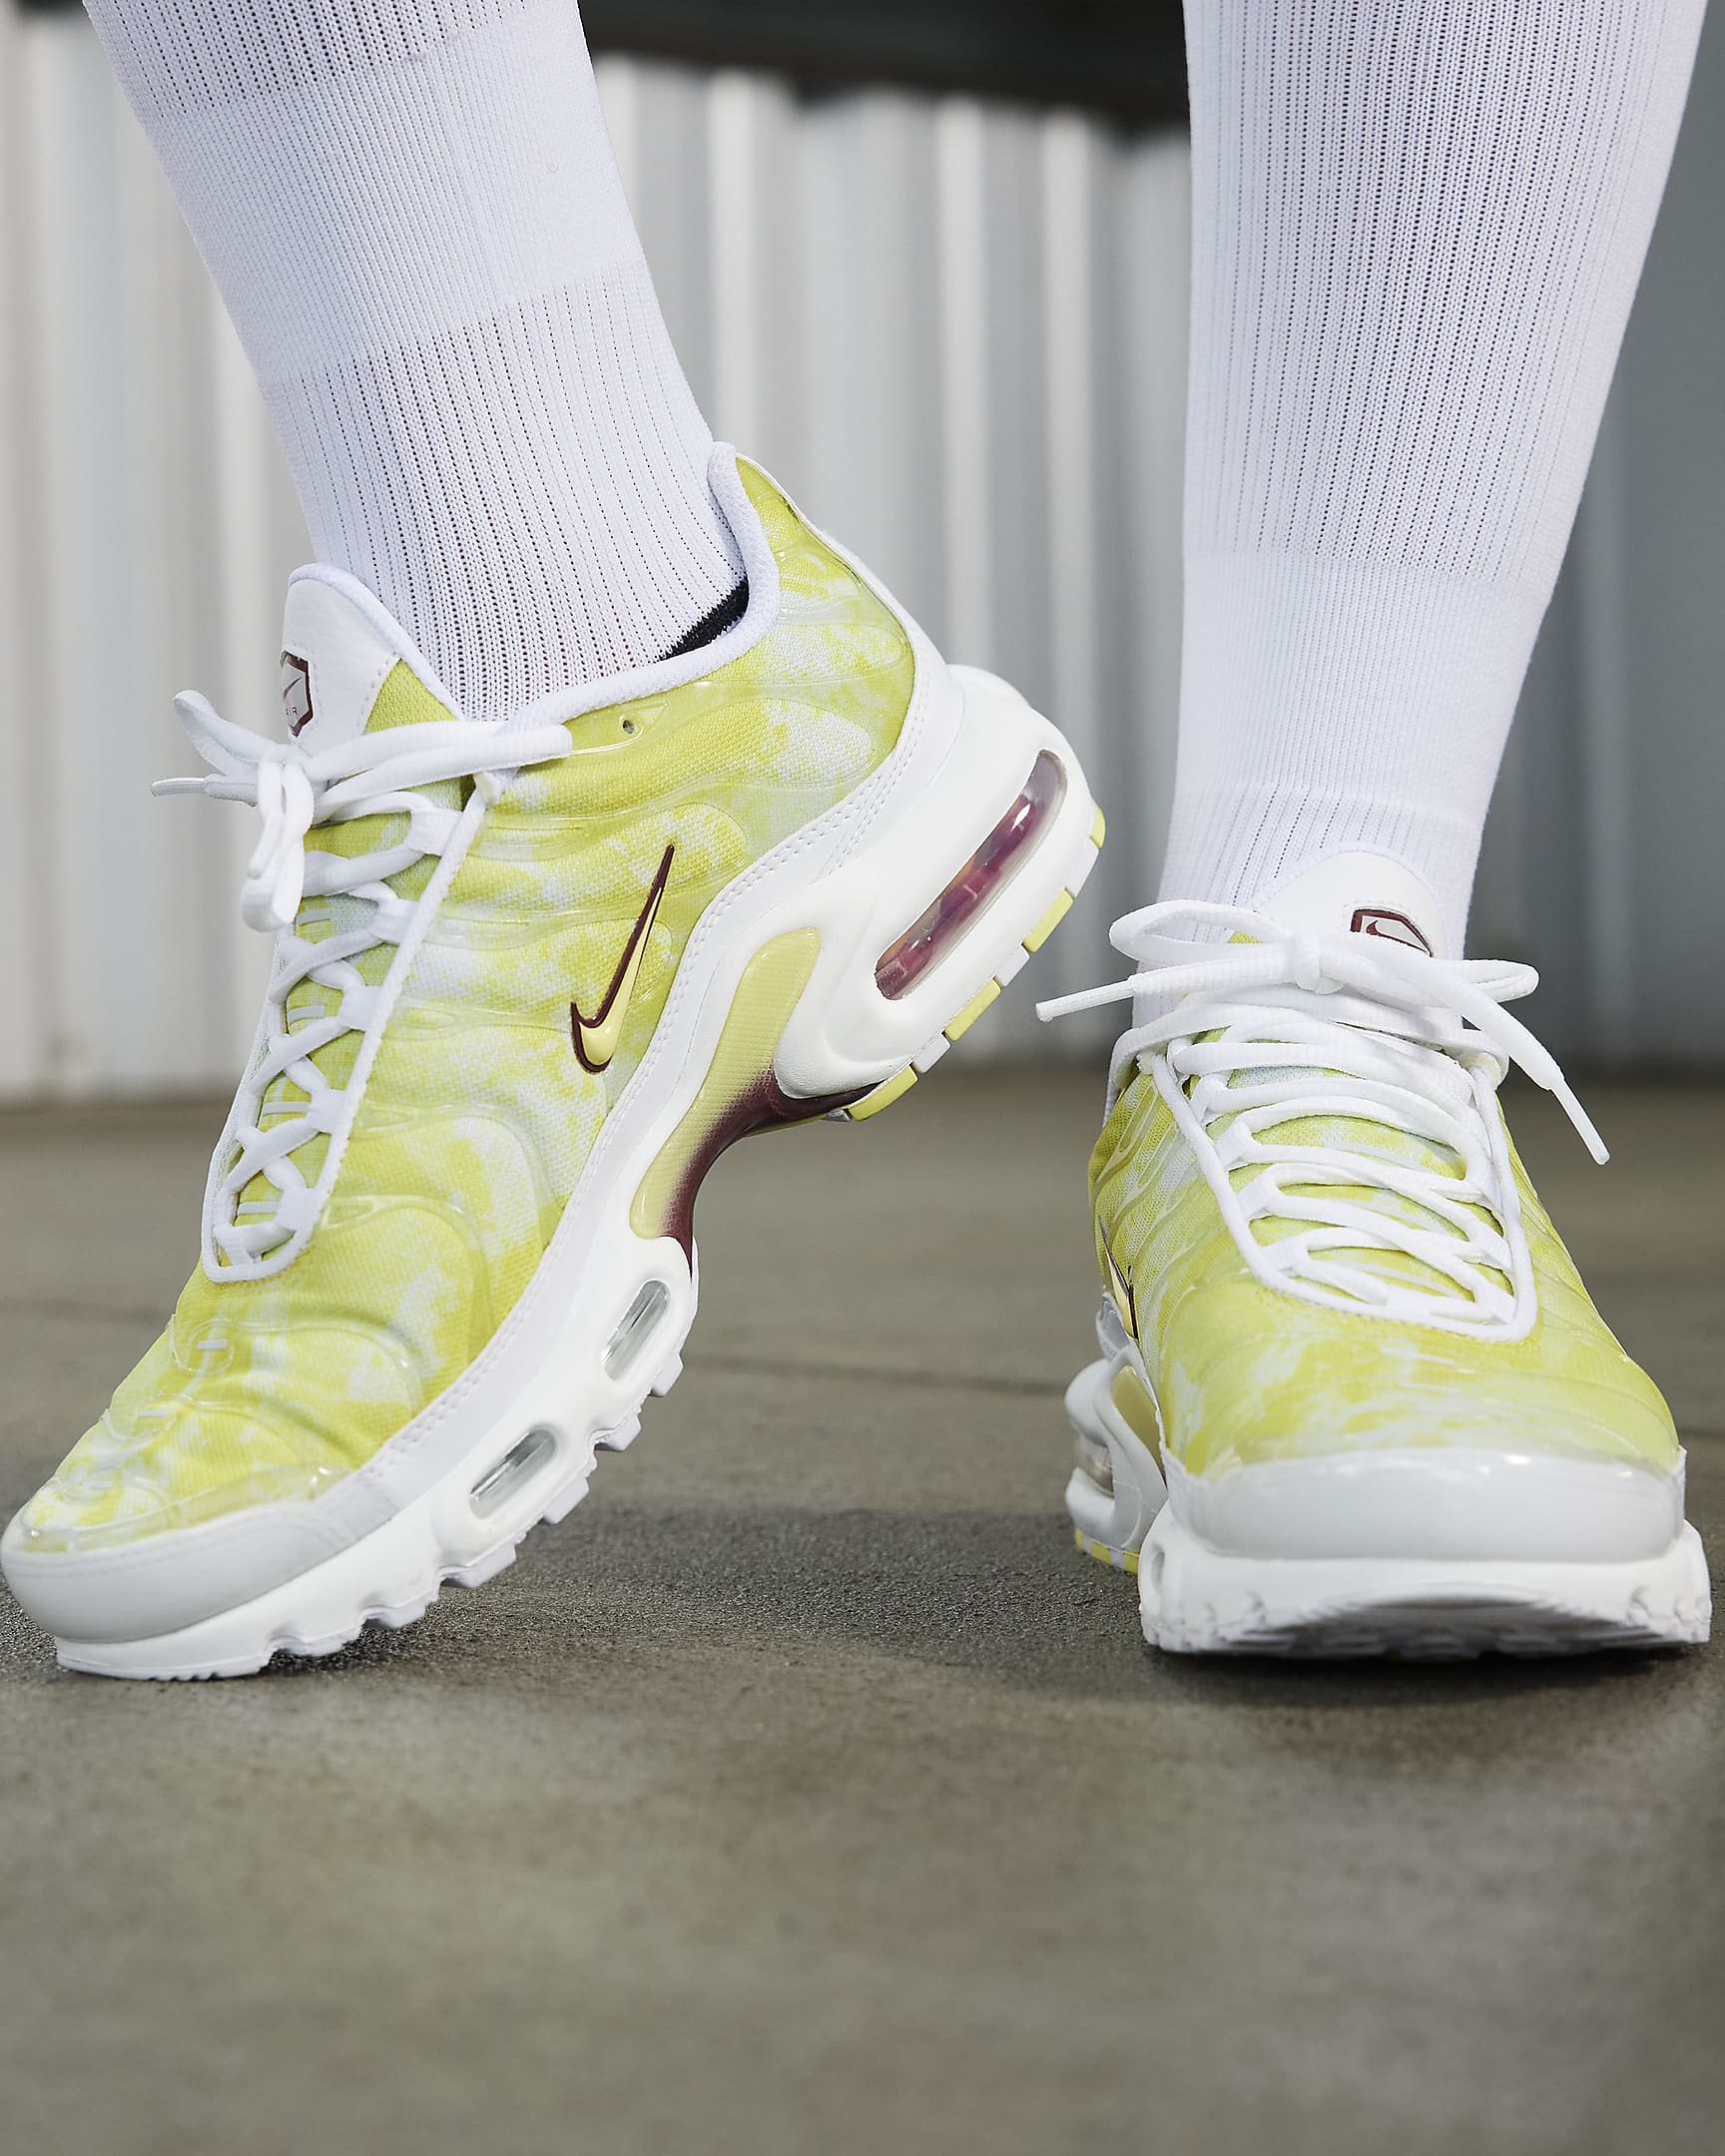 Nike Air Max Plus Women's Shoes - White/Football Grey/Dark Team Red/Light Laser Orange